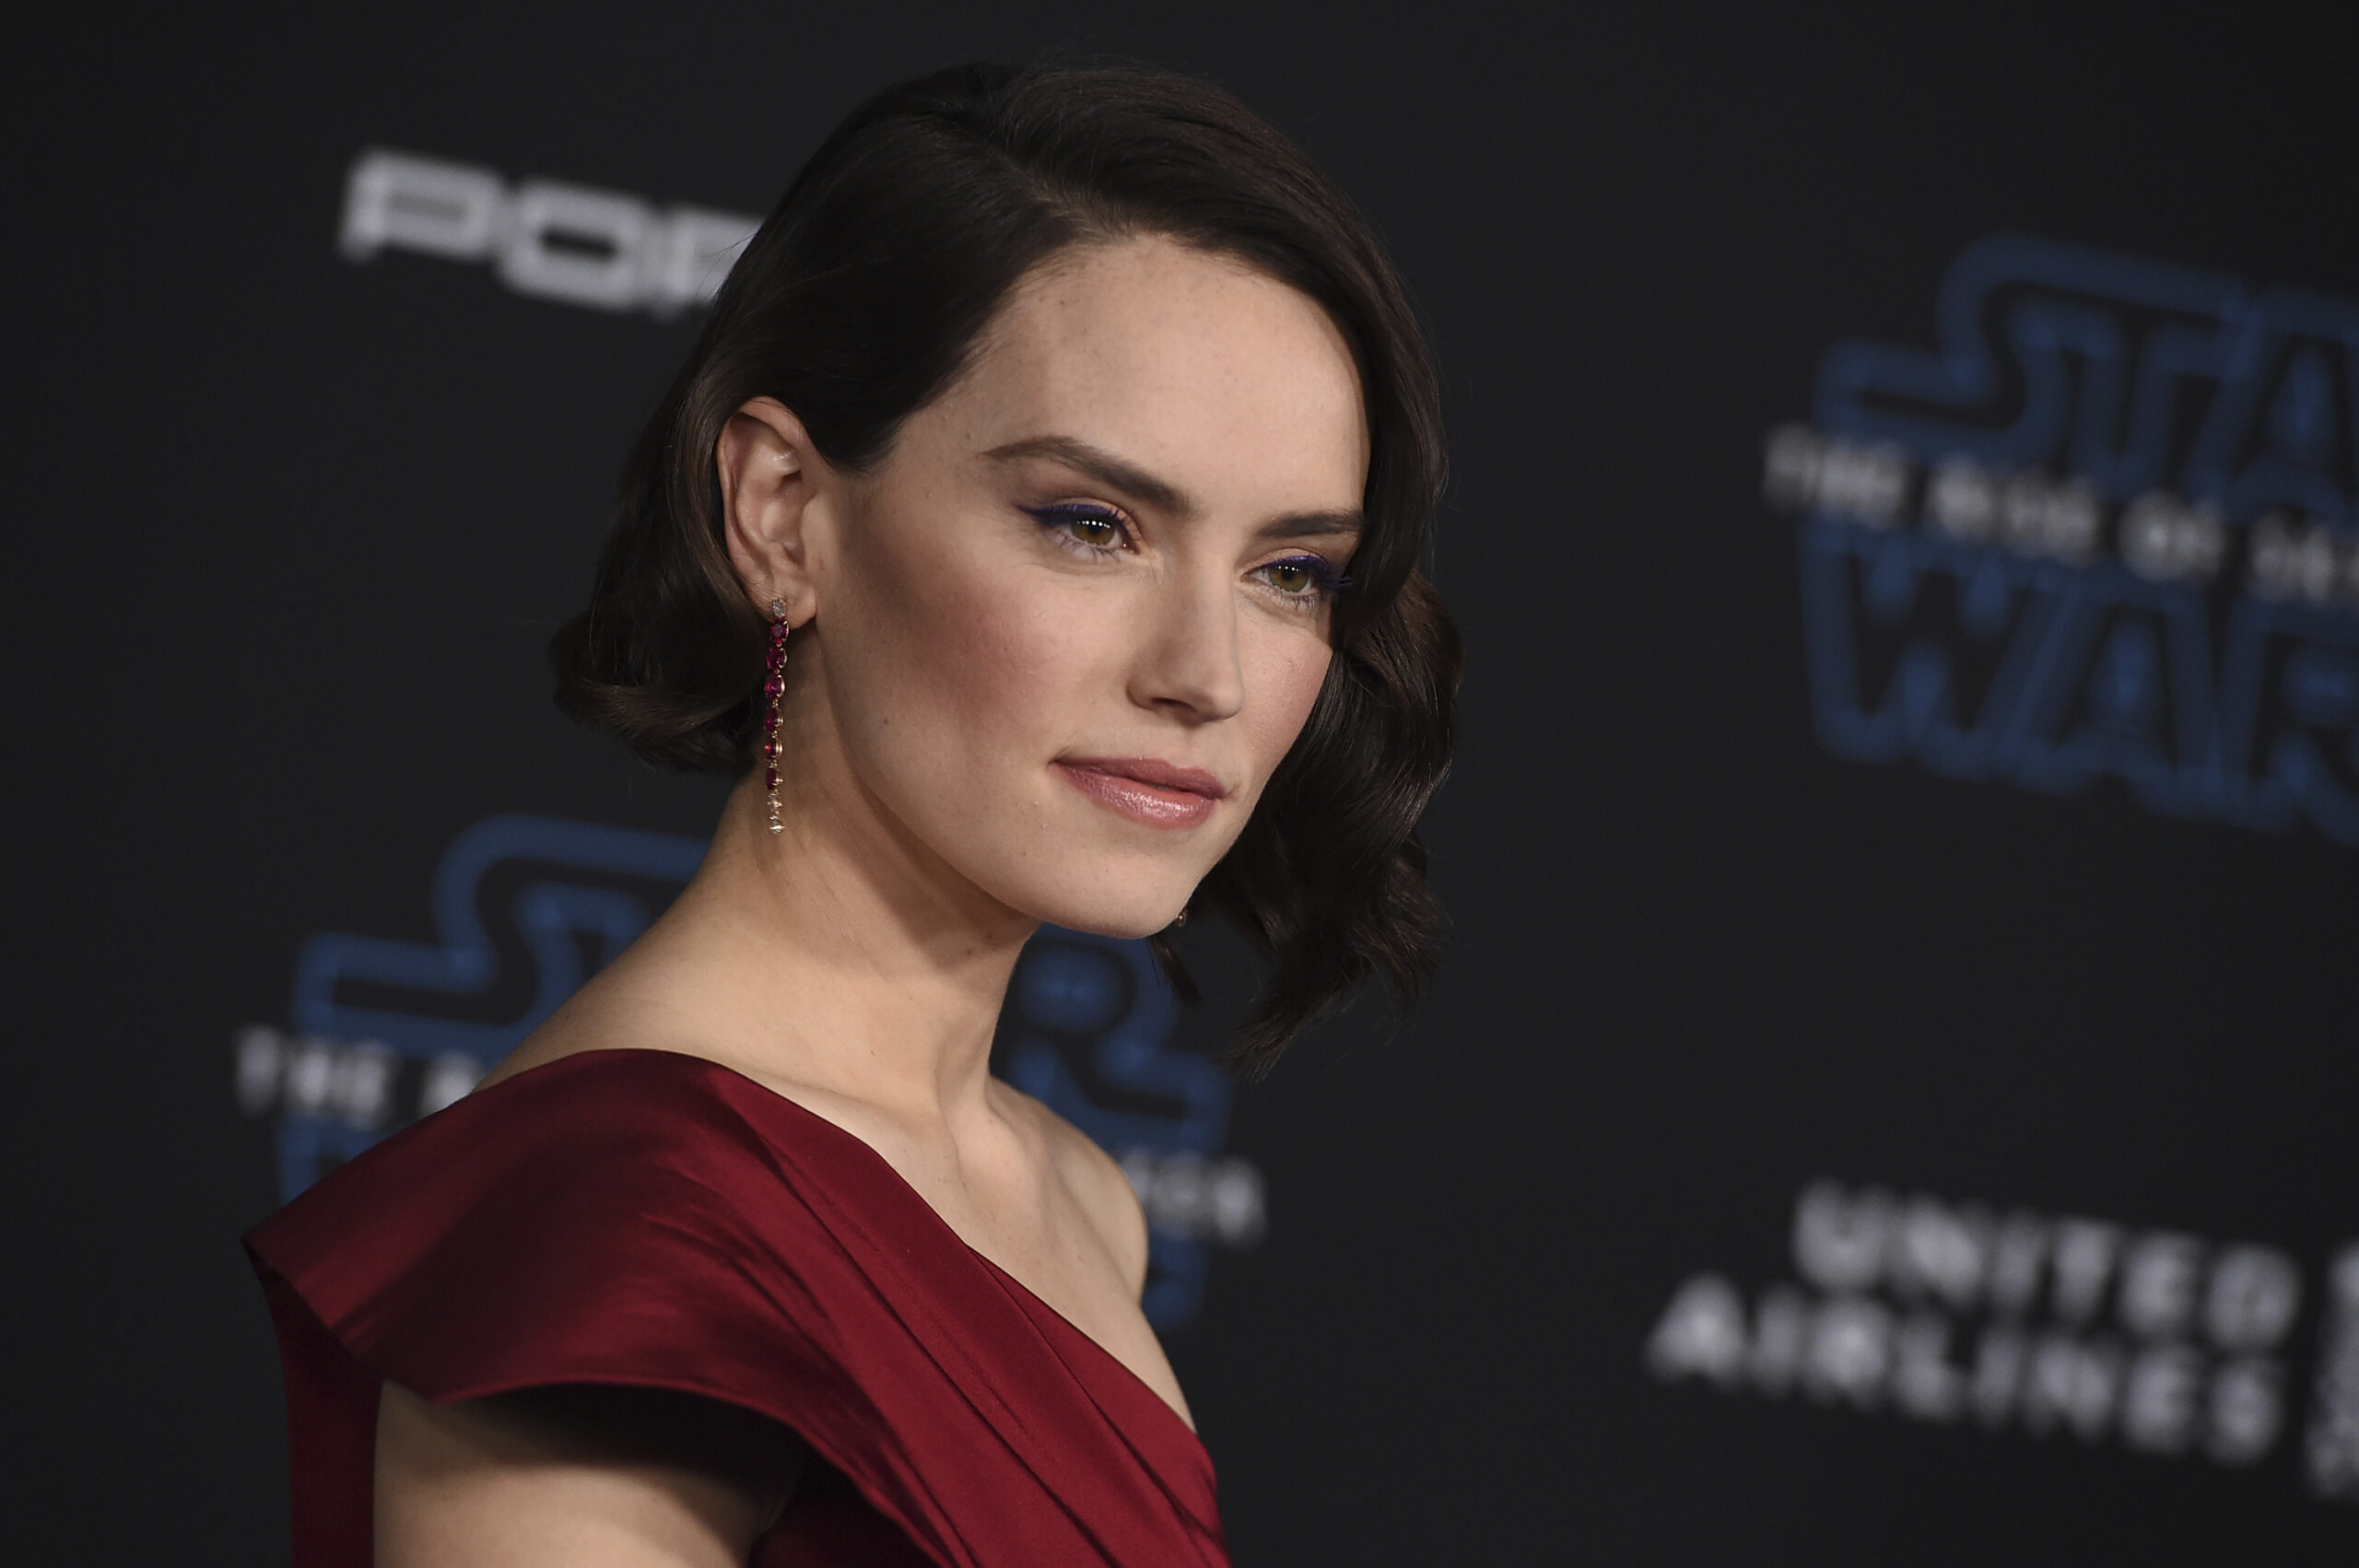 Three New ‘Star Wars’ Films Announced, Including Daisy Ridley’s Return as Rey